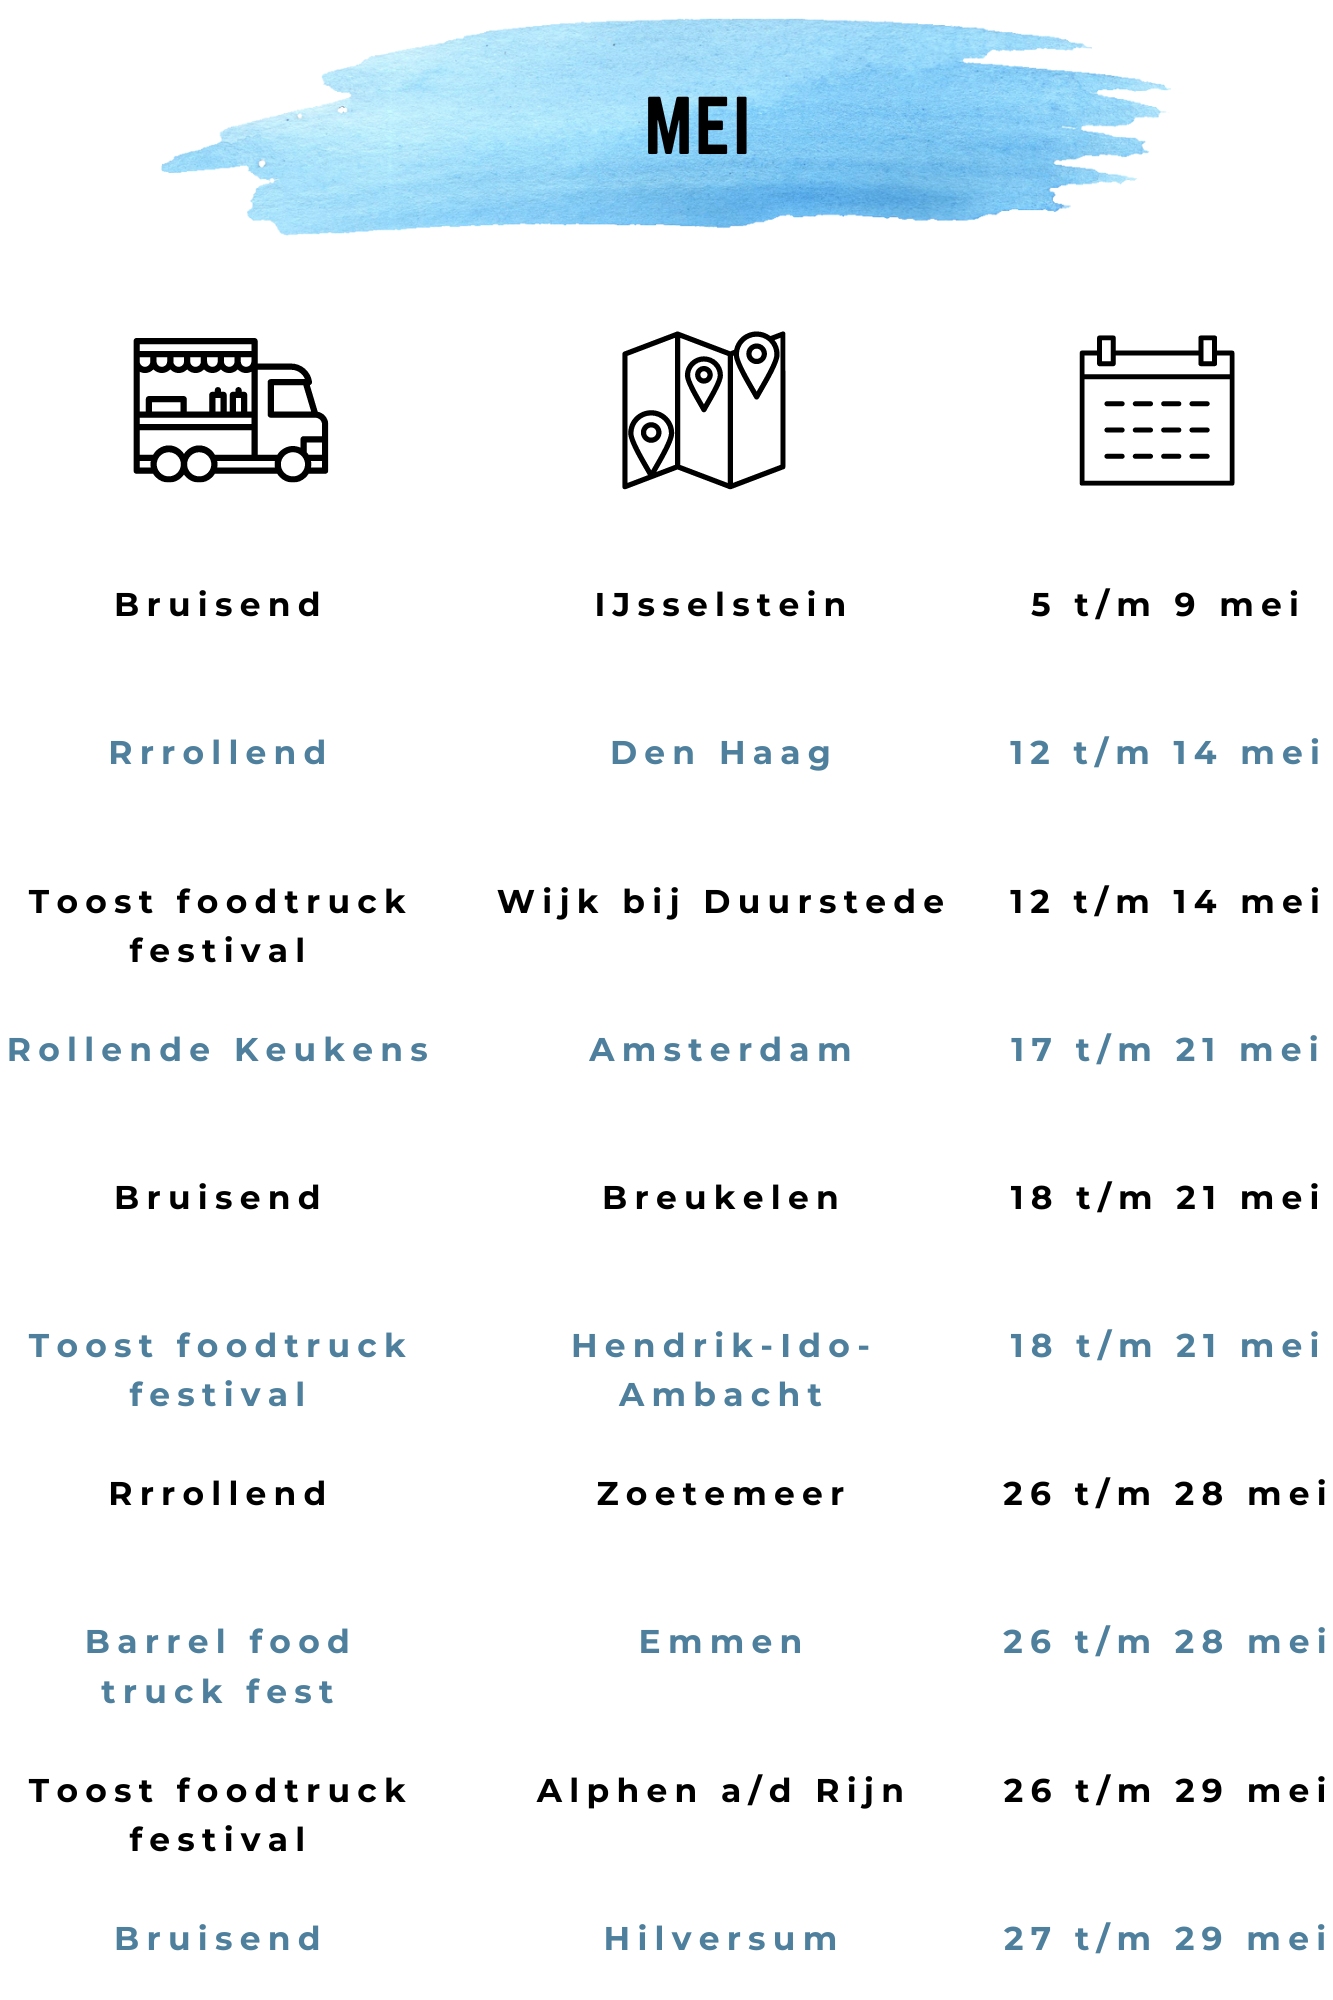 Foodtruck festival mei 2023 Bruisend Rrrollend Toost Rollende keukens Barrel IJsselstein, Den Haag, Wijk bij Duurstede, Amsterdam, Breukelen, Hendrik-Ido-Ambacht, Zoetemeer, Emmen, Alphen a/d Rijn, Hilversum